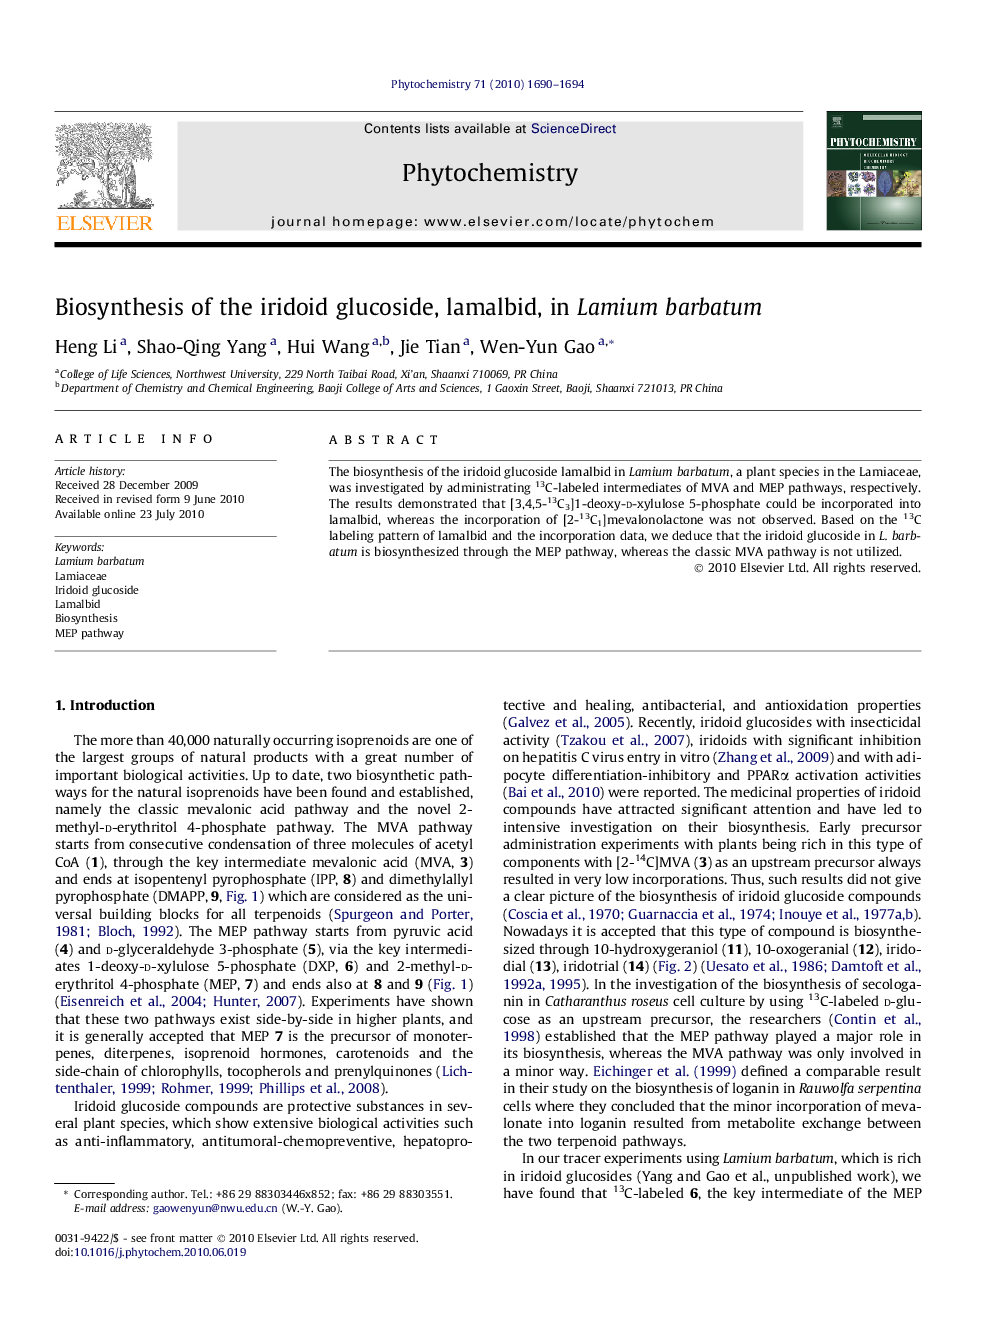 Biosynthesis of the iridoid glucoside, lamalbid, in Lamium barbatum